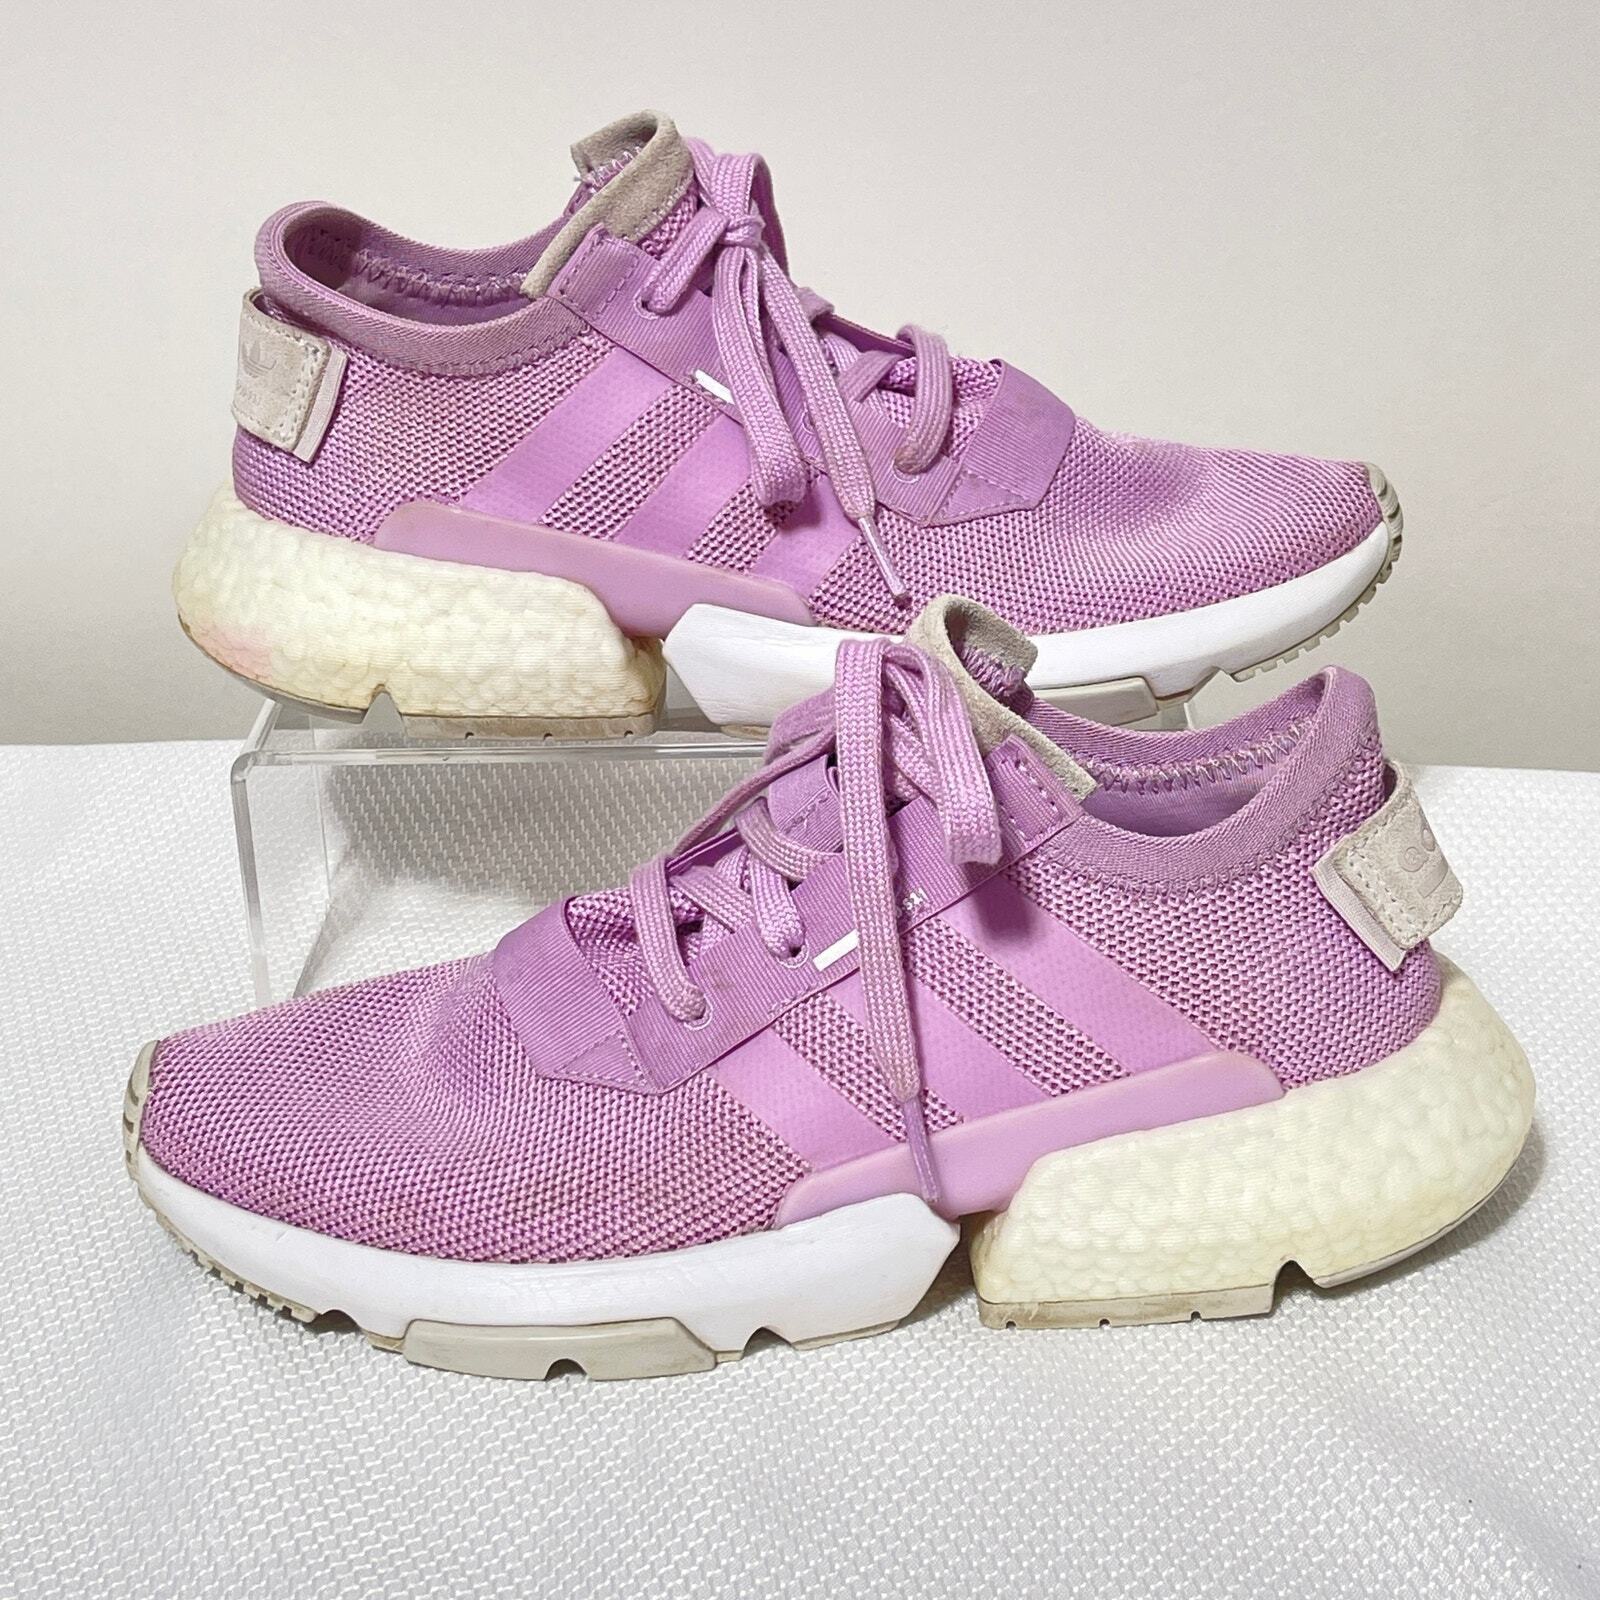 Adidas Original Sneakers Womens 8 POD-S3.1 Knit Running Purple Lilac Shoe B37469